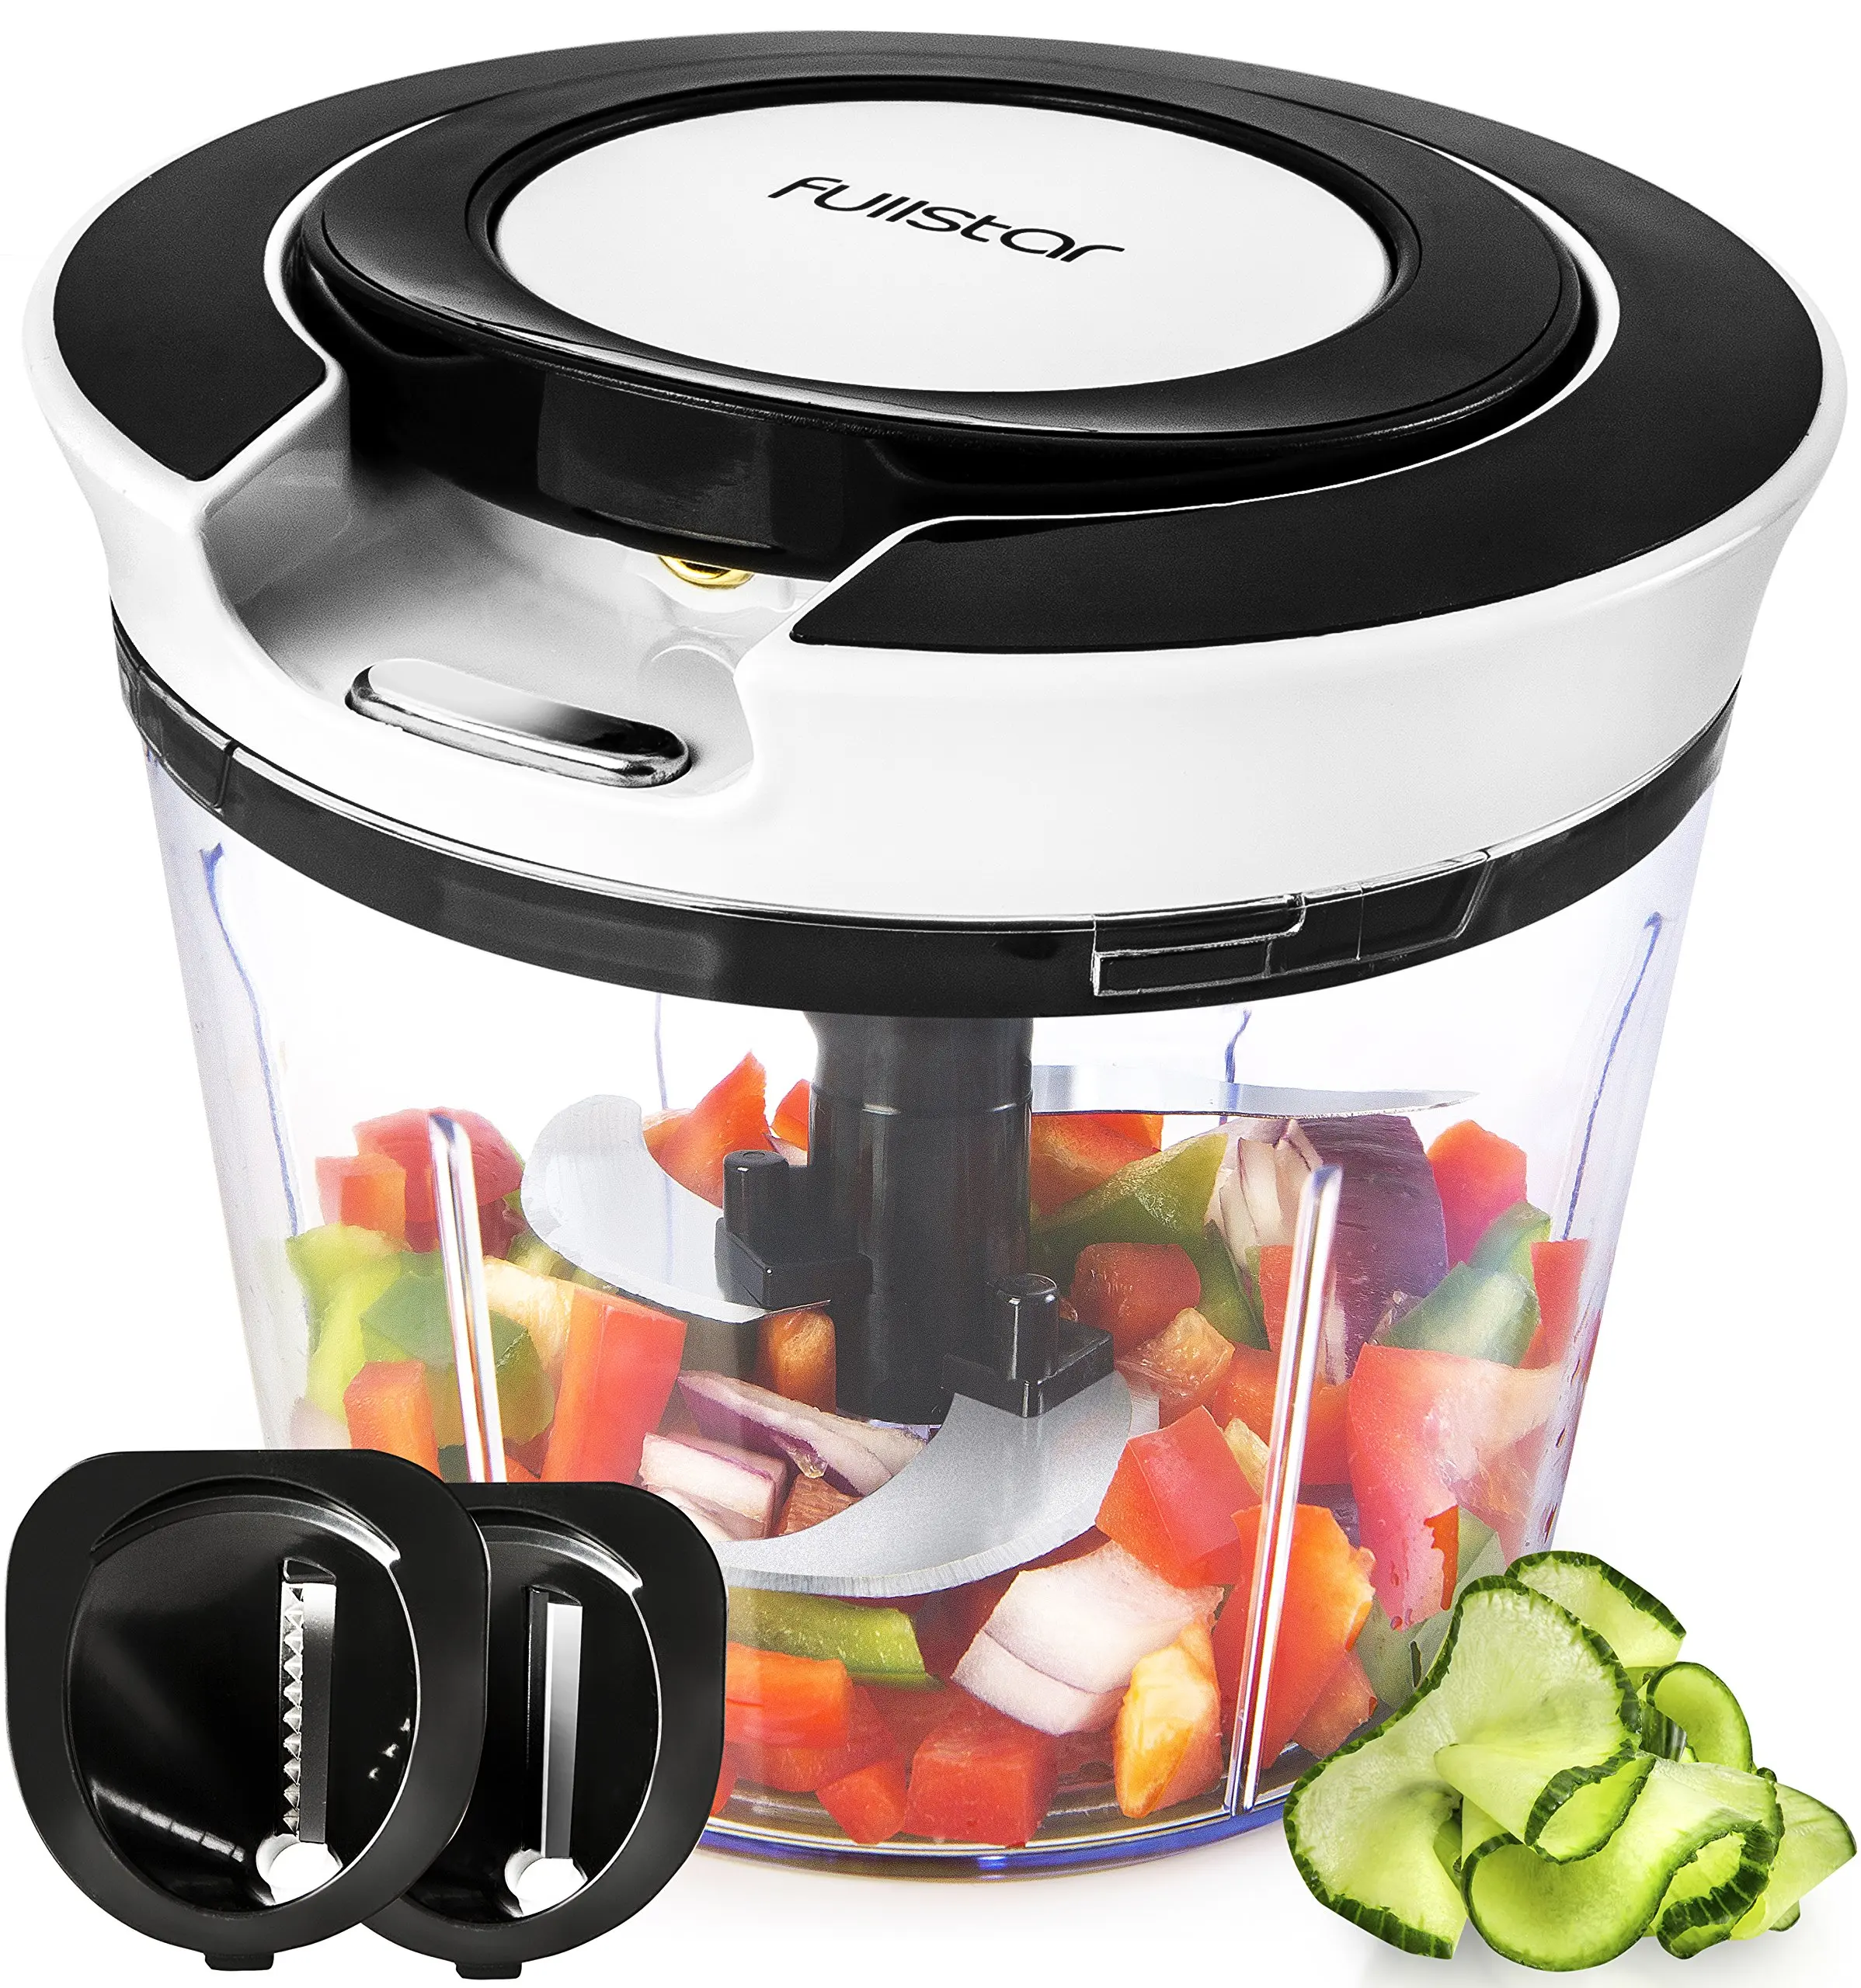 Buy Vegetable Chopper & Vegetable Slicer - Hand-Powered Food Chopper